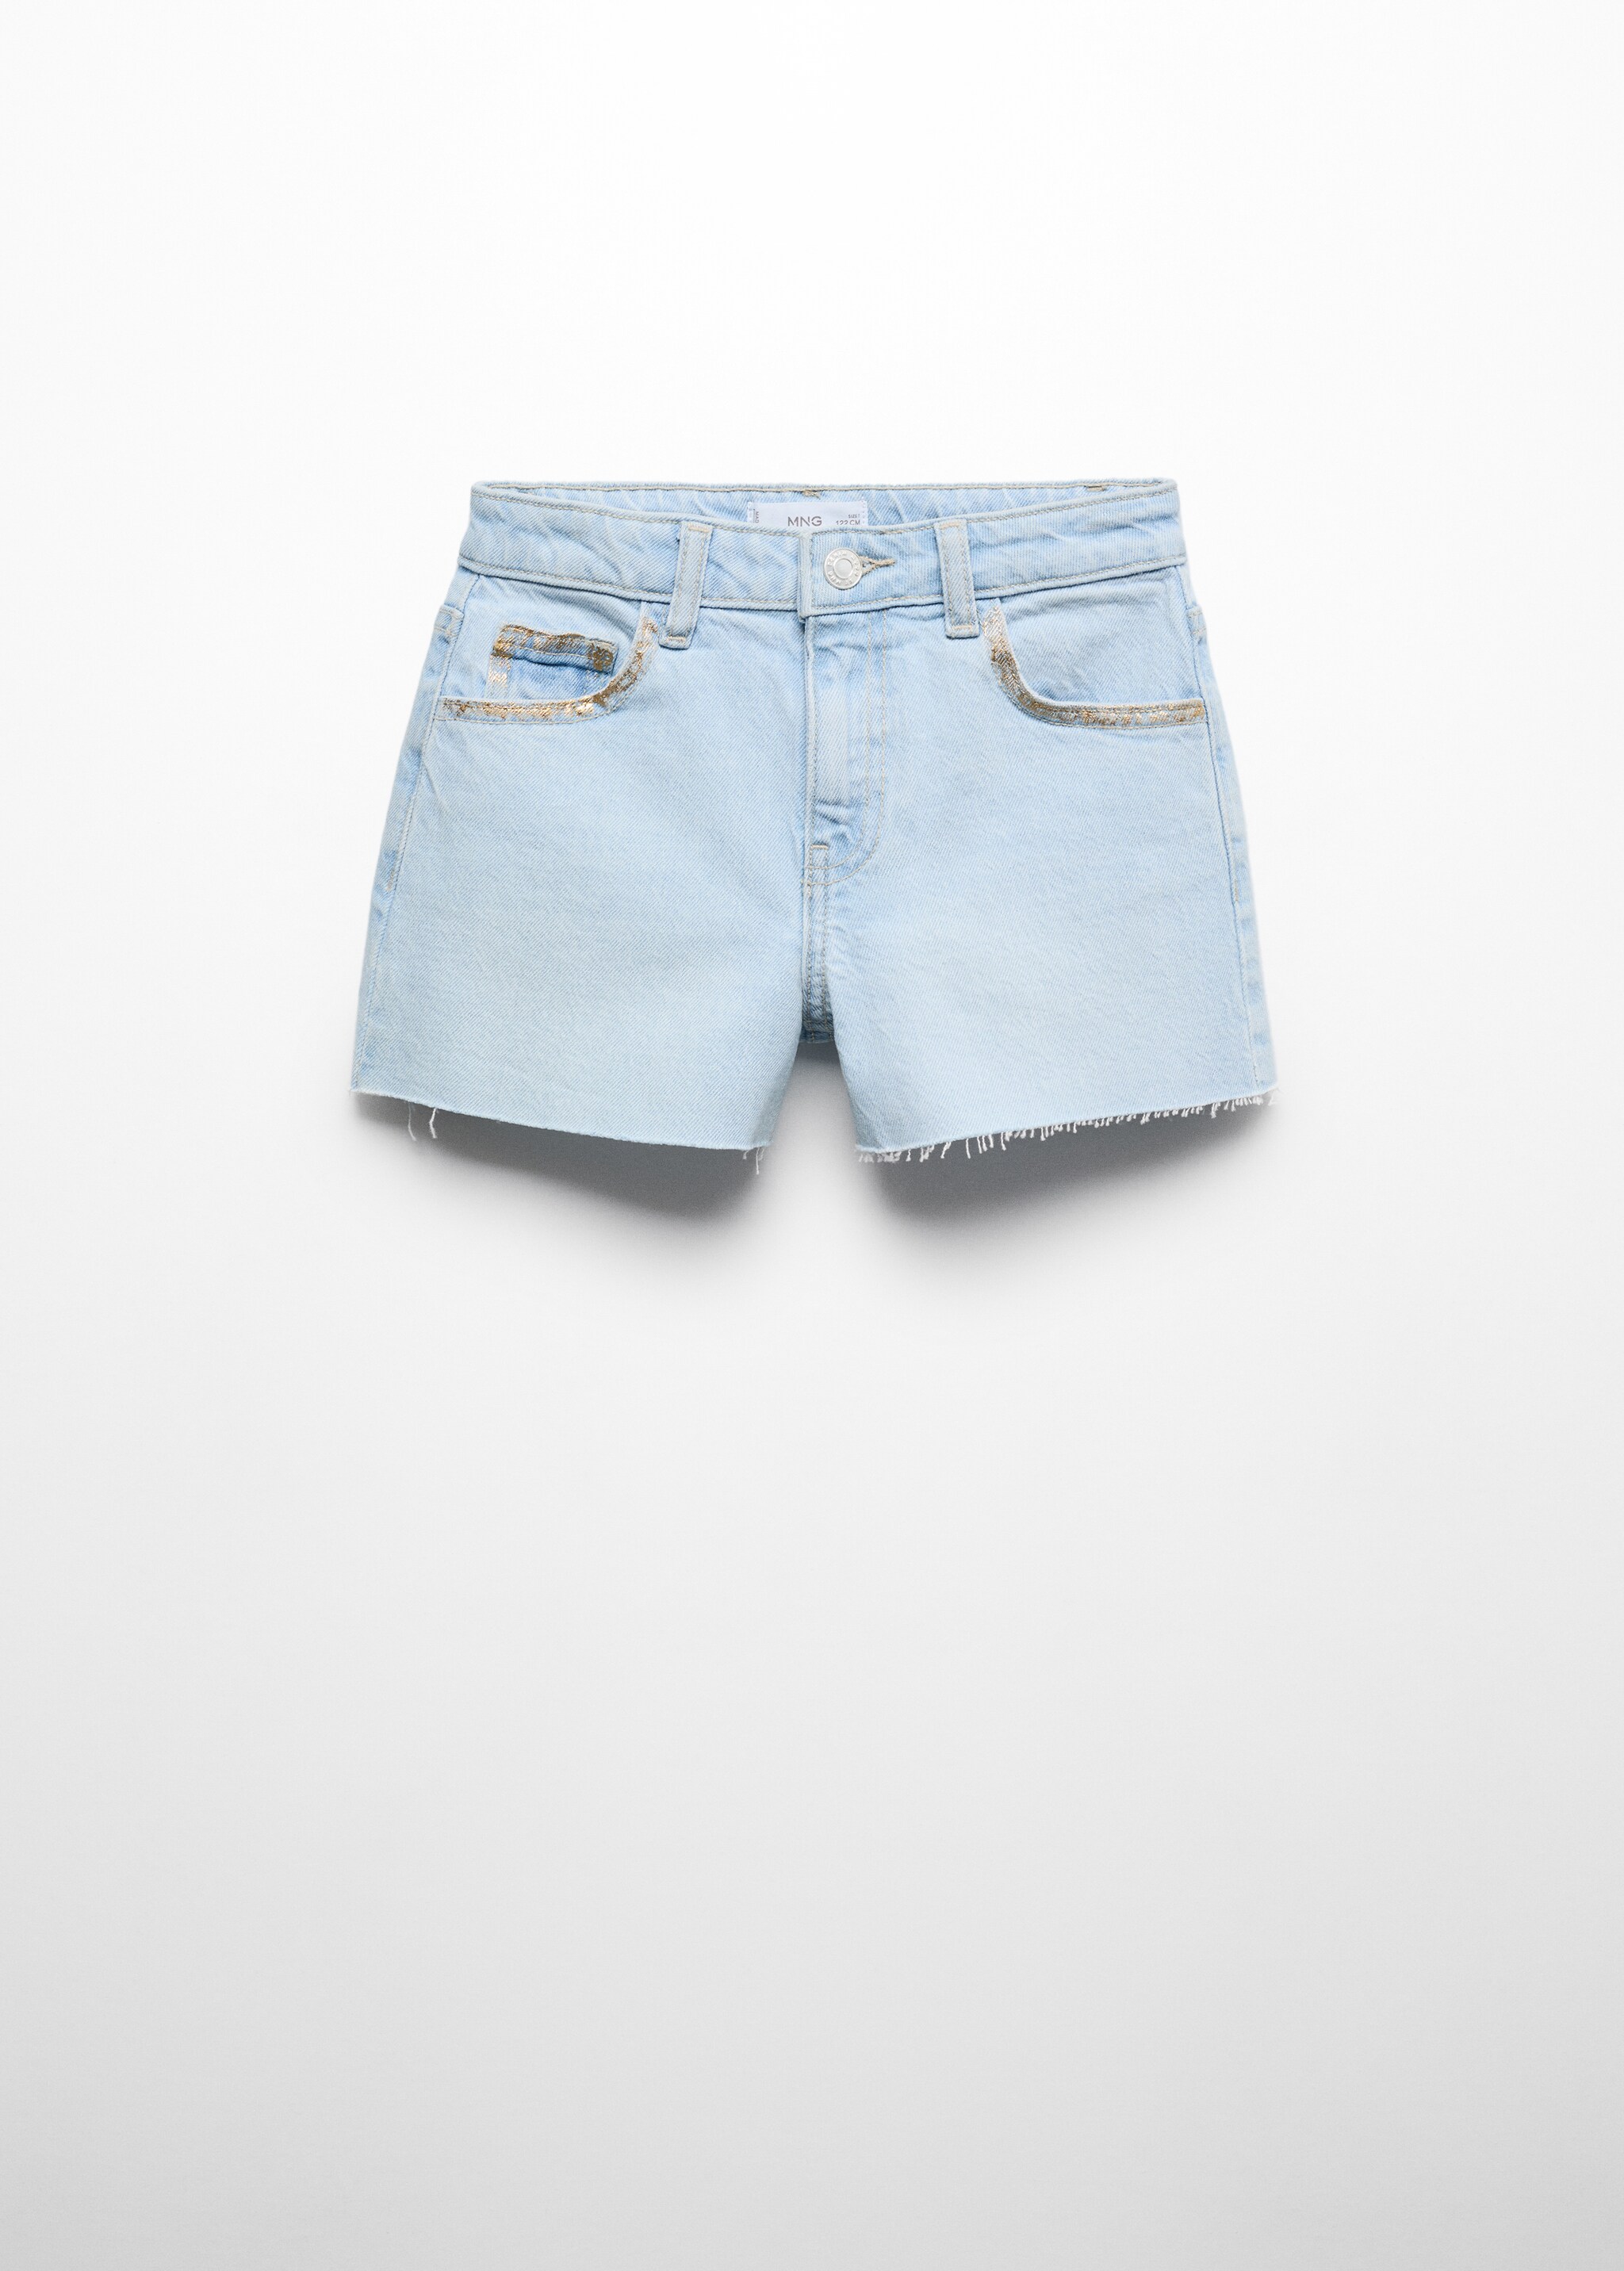 Denim shorts with frayed hem - Article without model